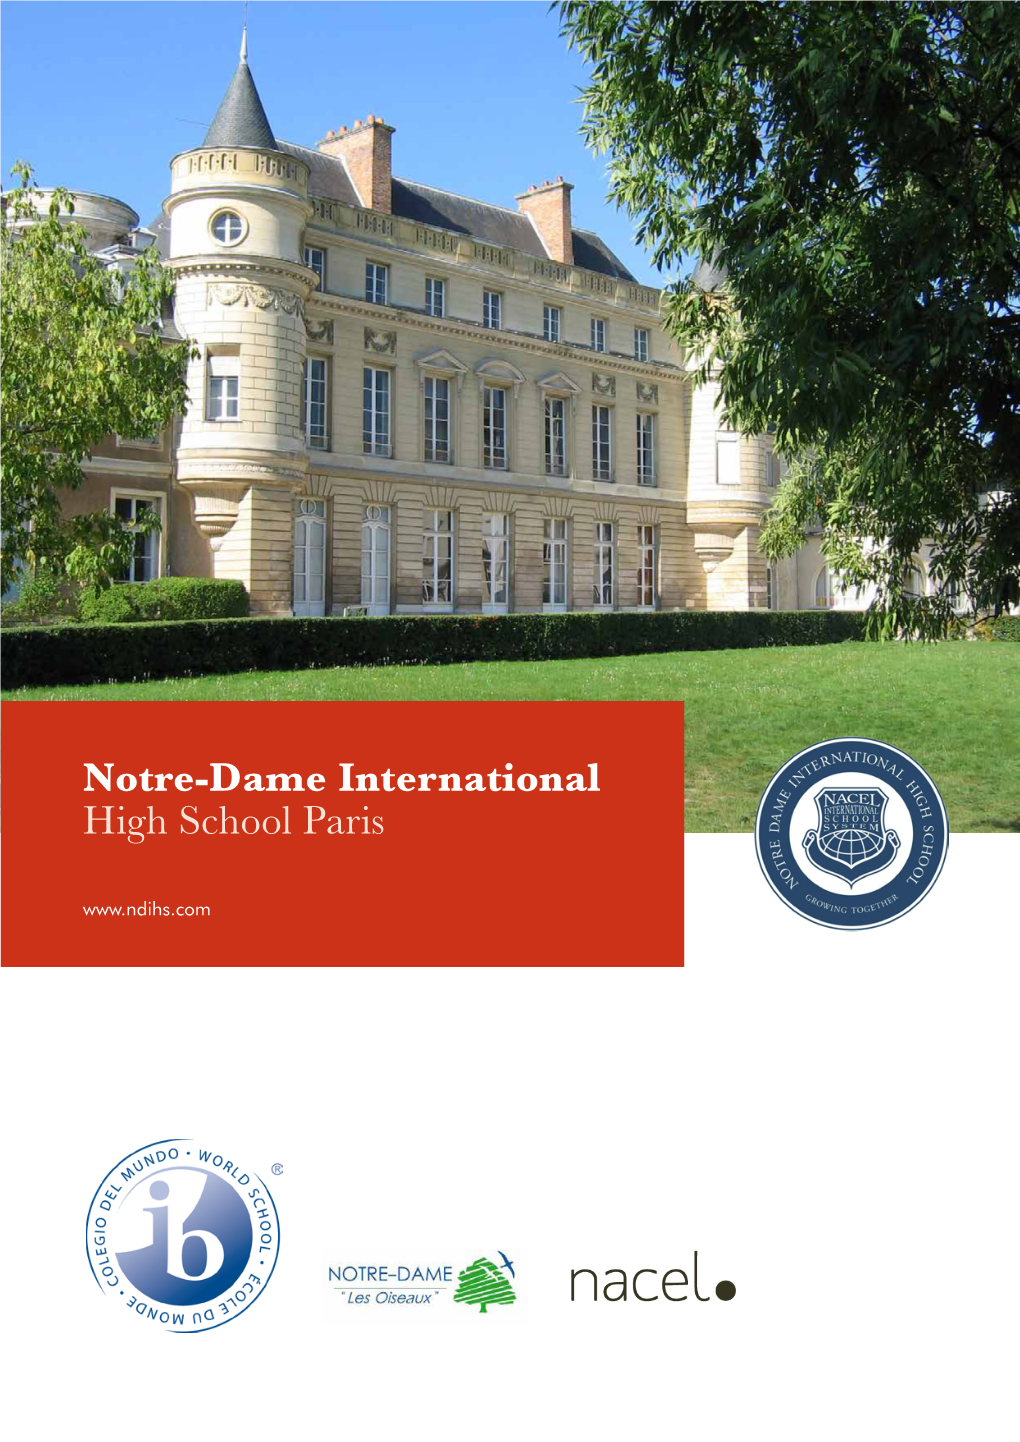 Notre-Dame International High School Paris